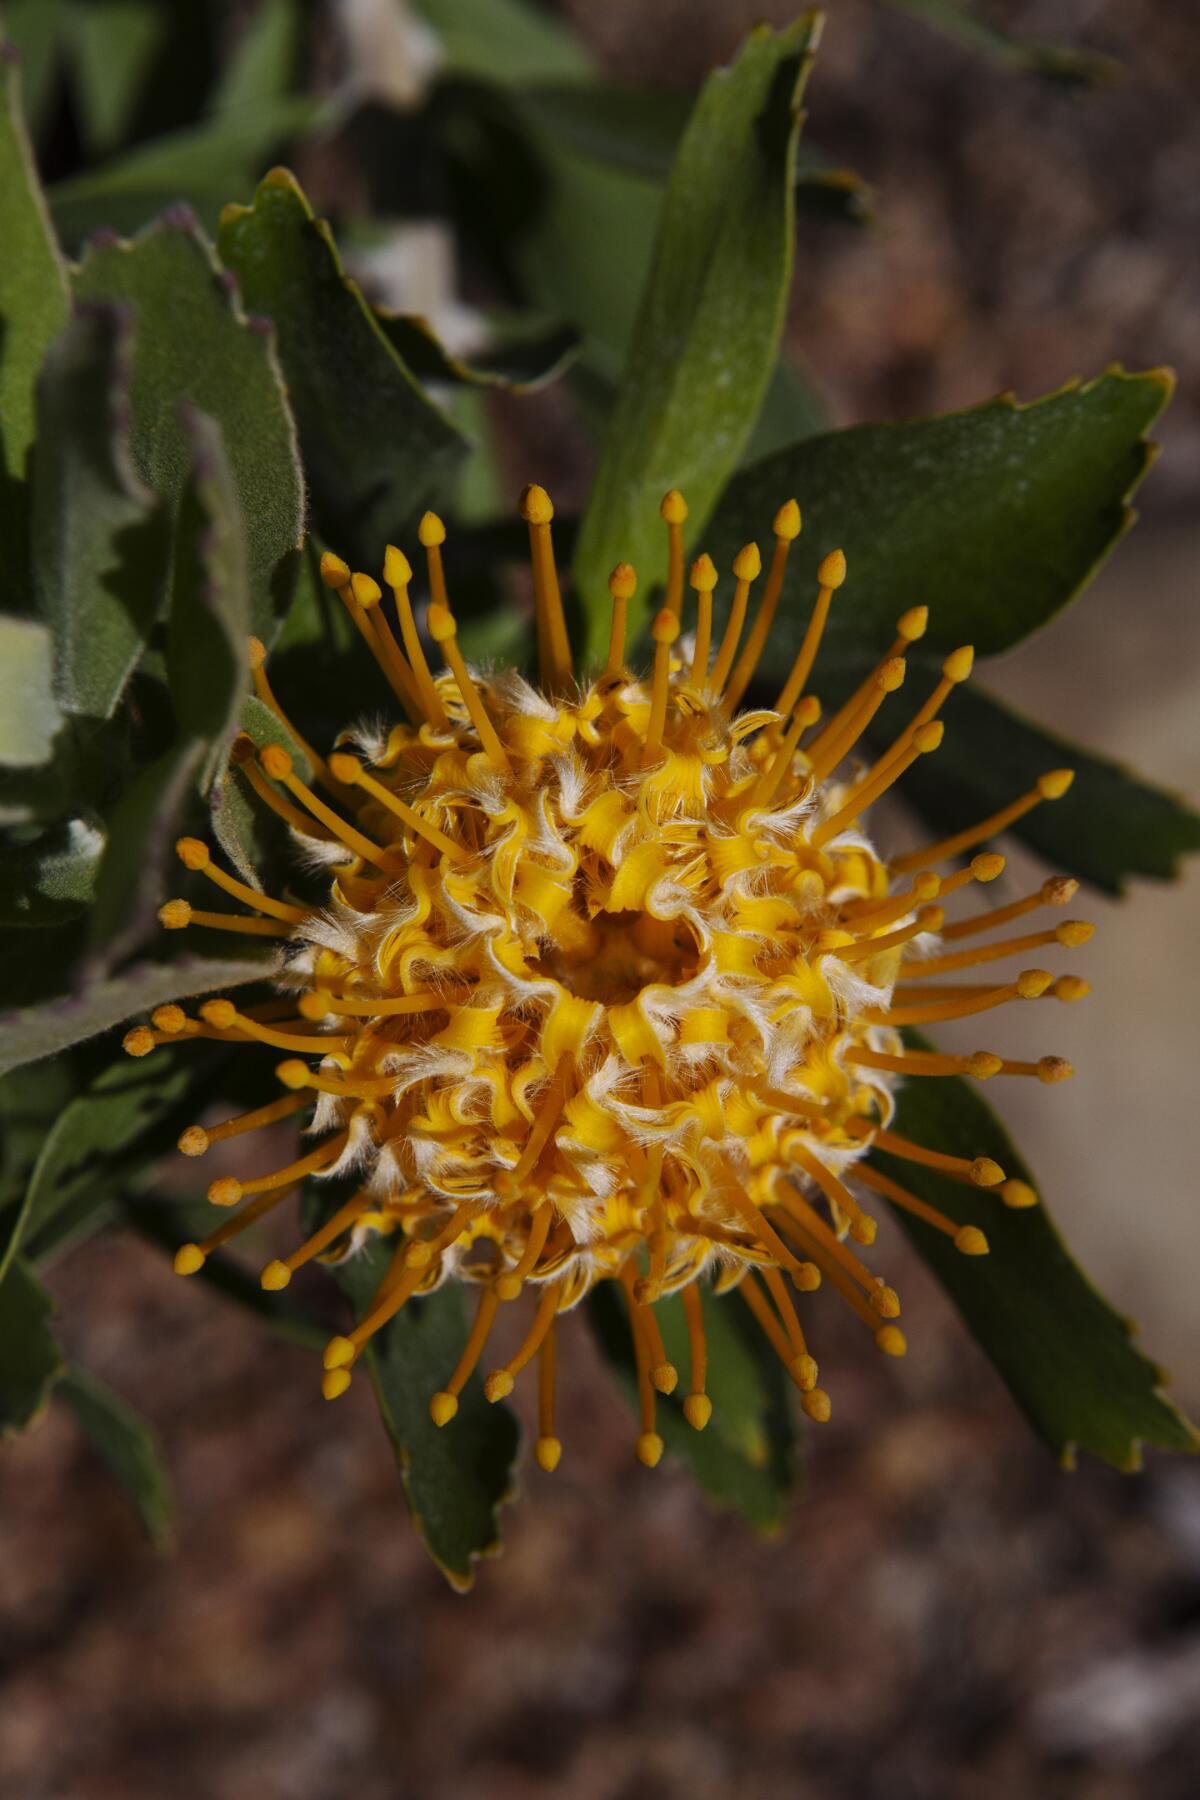 A closeup of a plant that looks like a pincushion